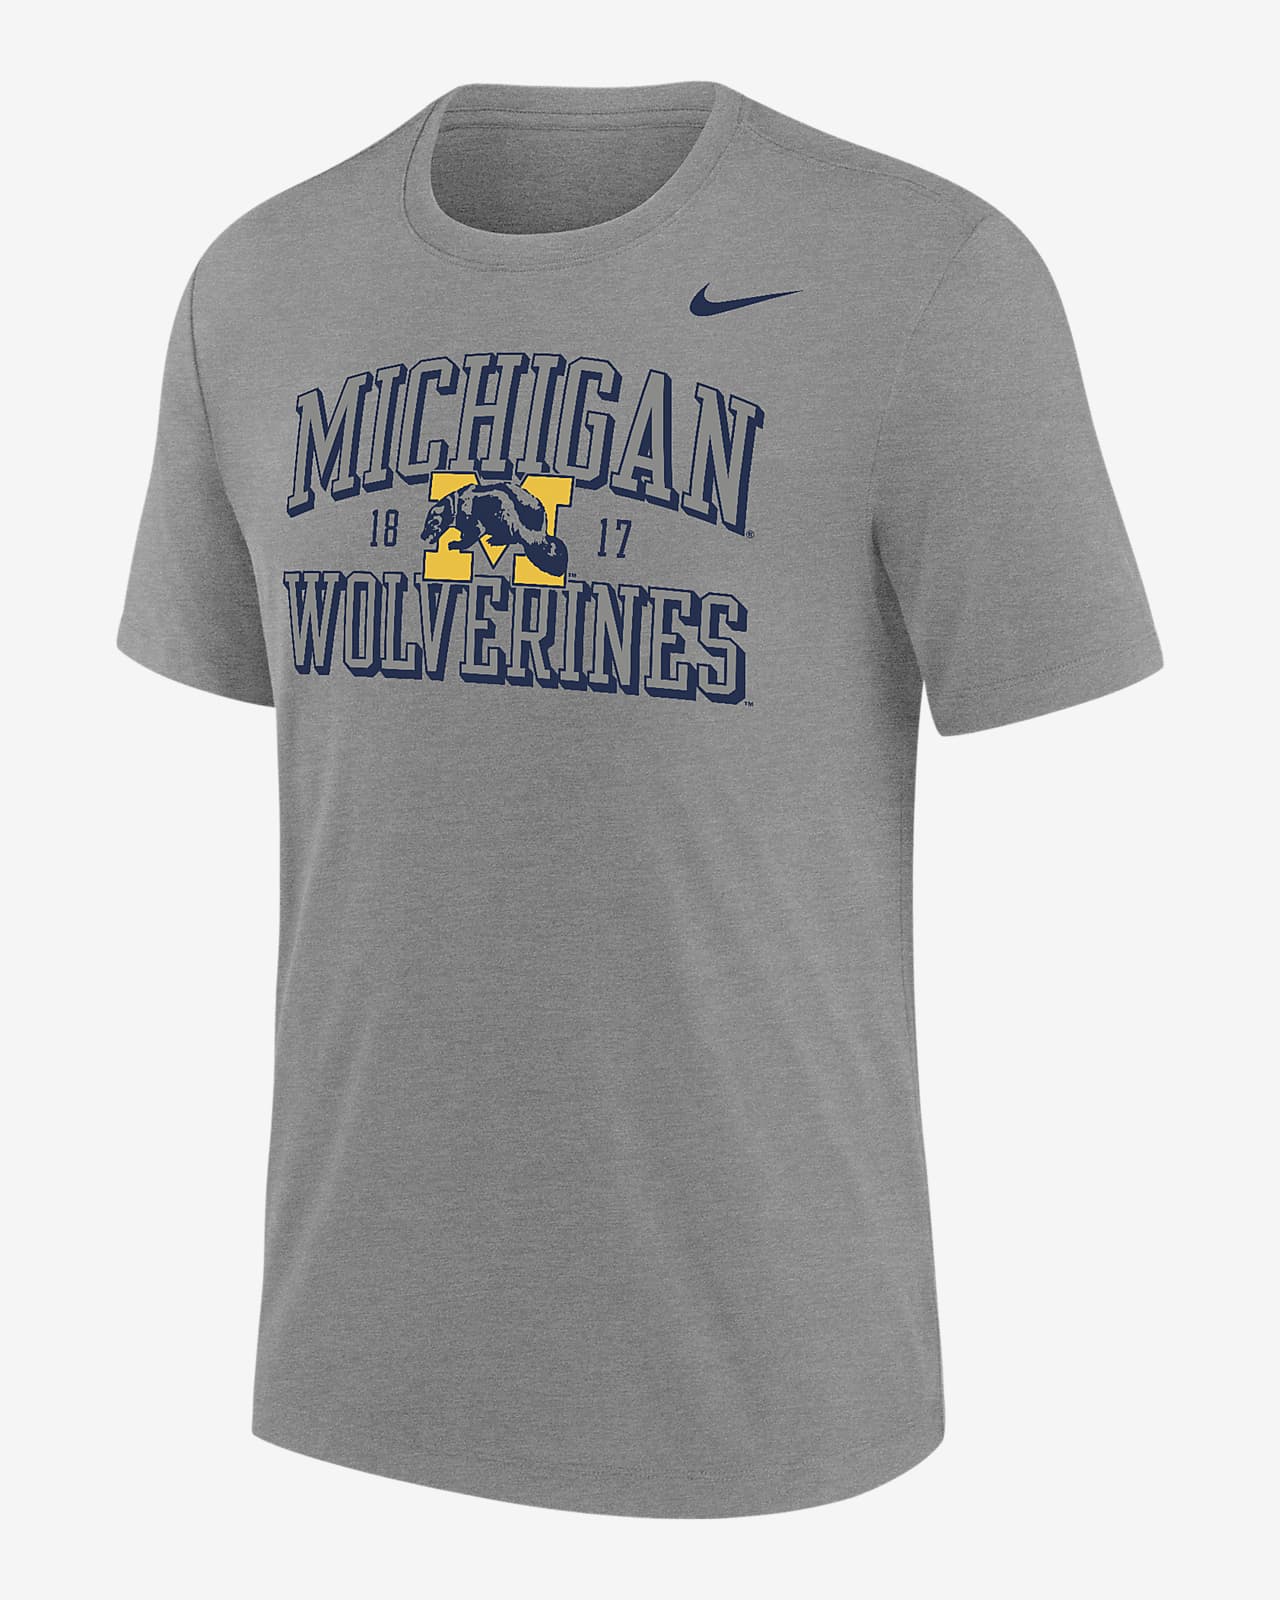 Michigan Men's Nike College T-Shirt